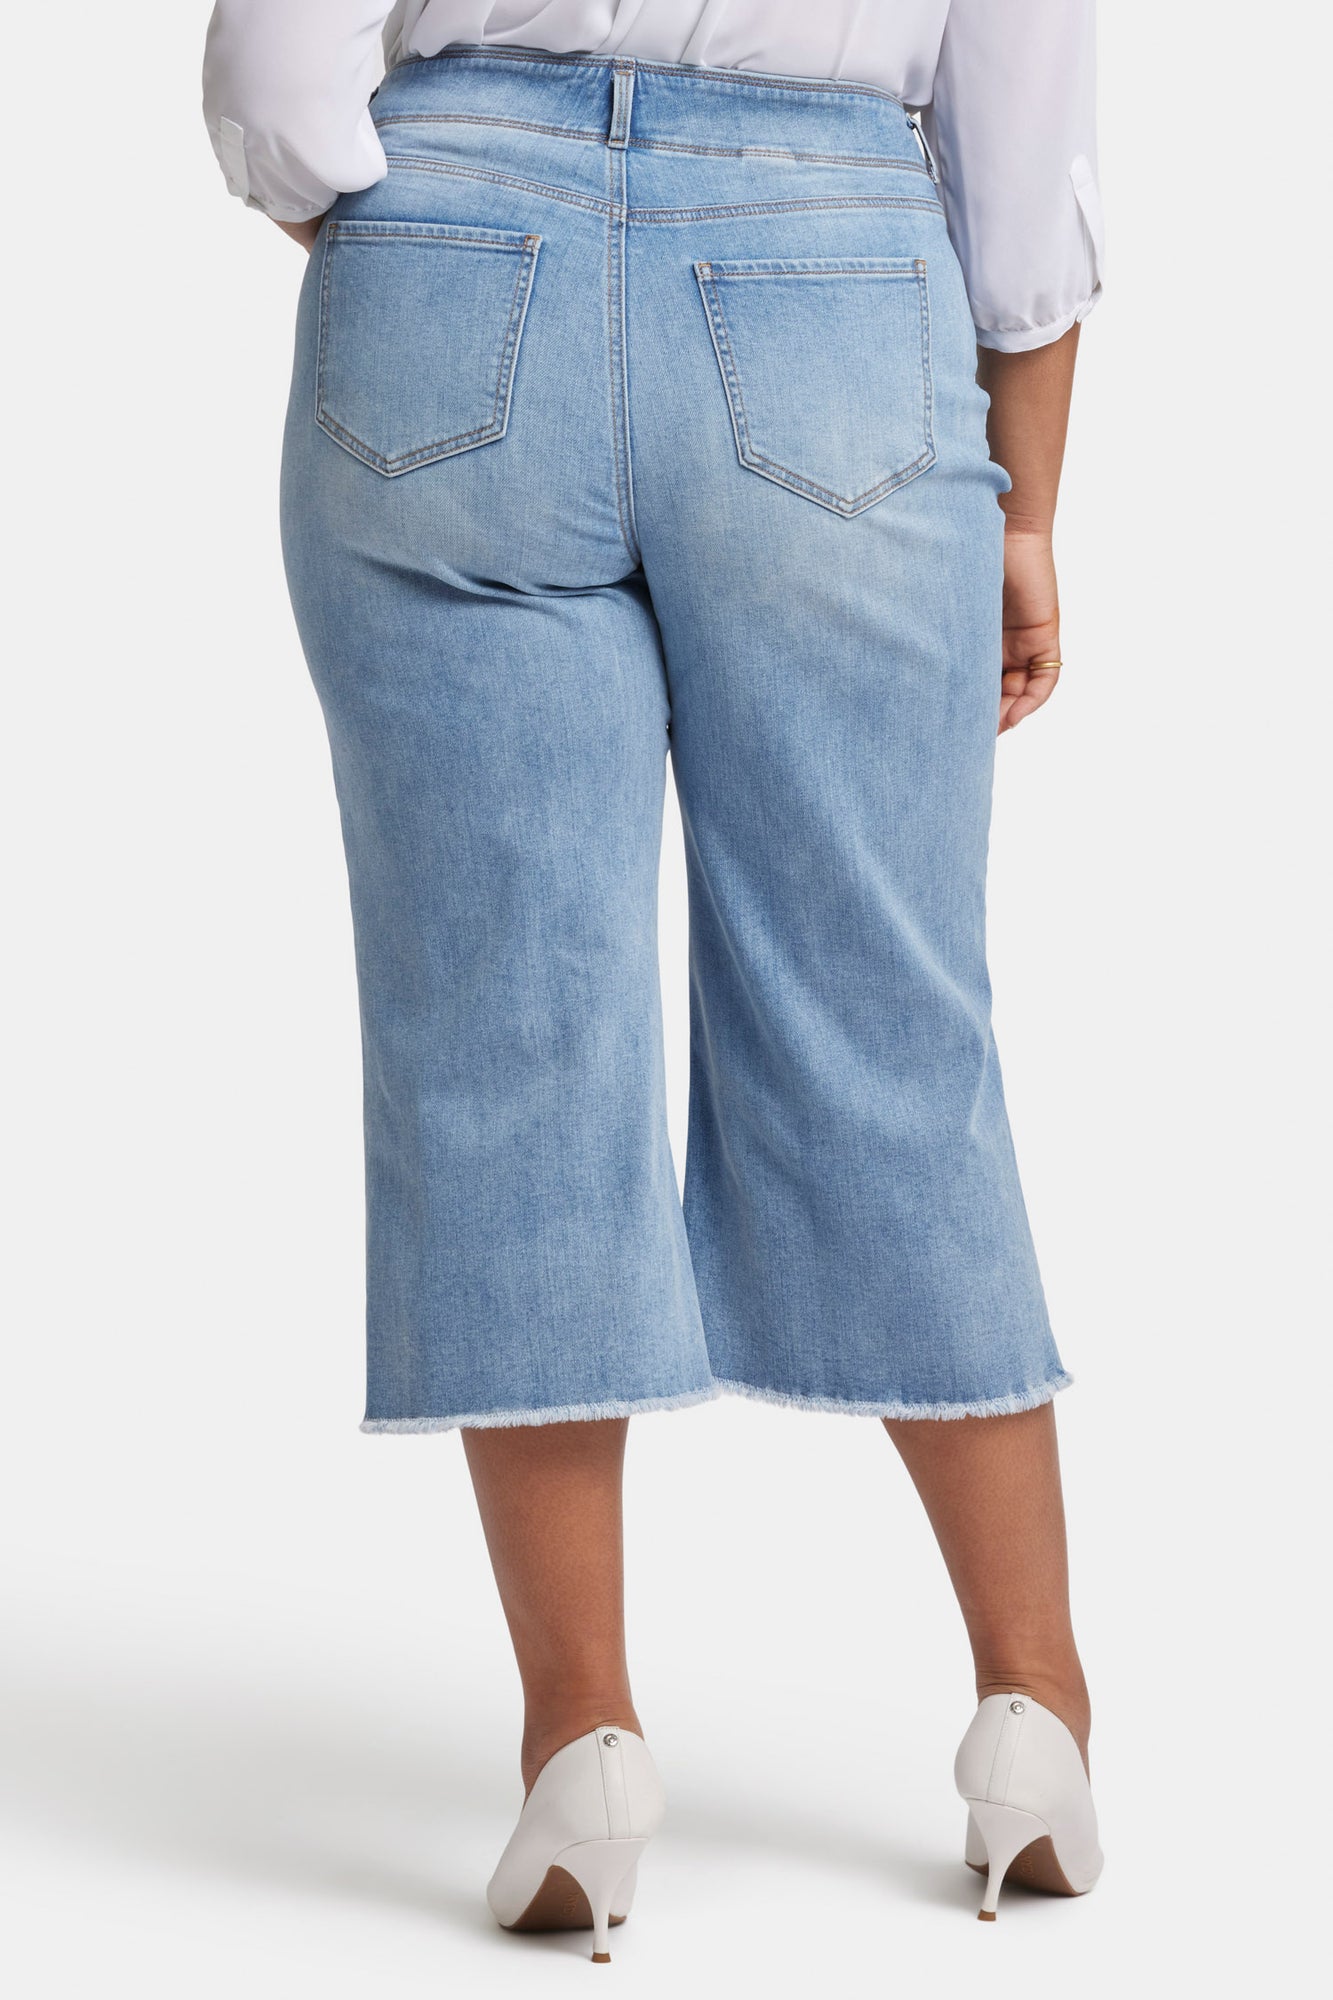 NYDJ Brigitte Wide Leg Capri Jeans In Plus Size With High Rise And Frayed Hems - Corfu